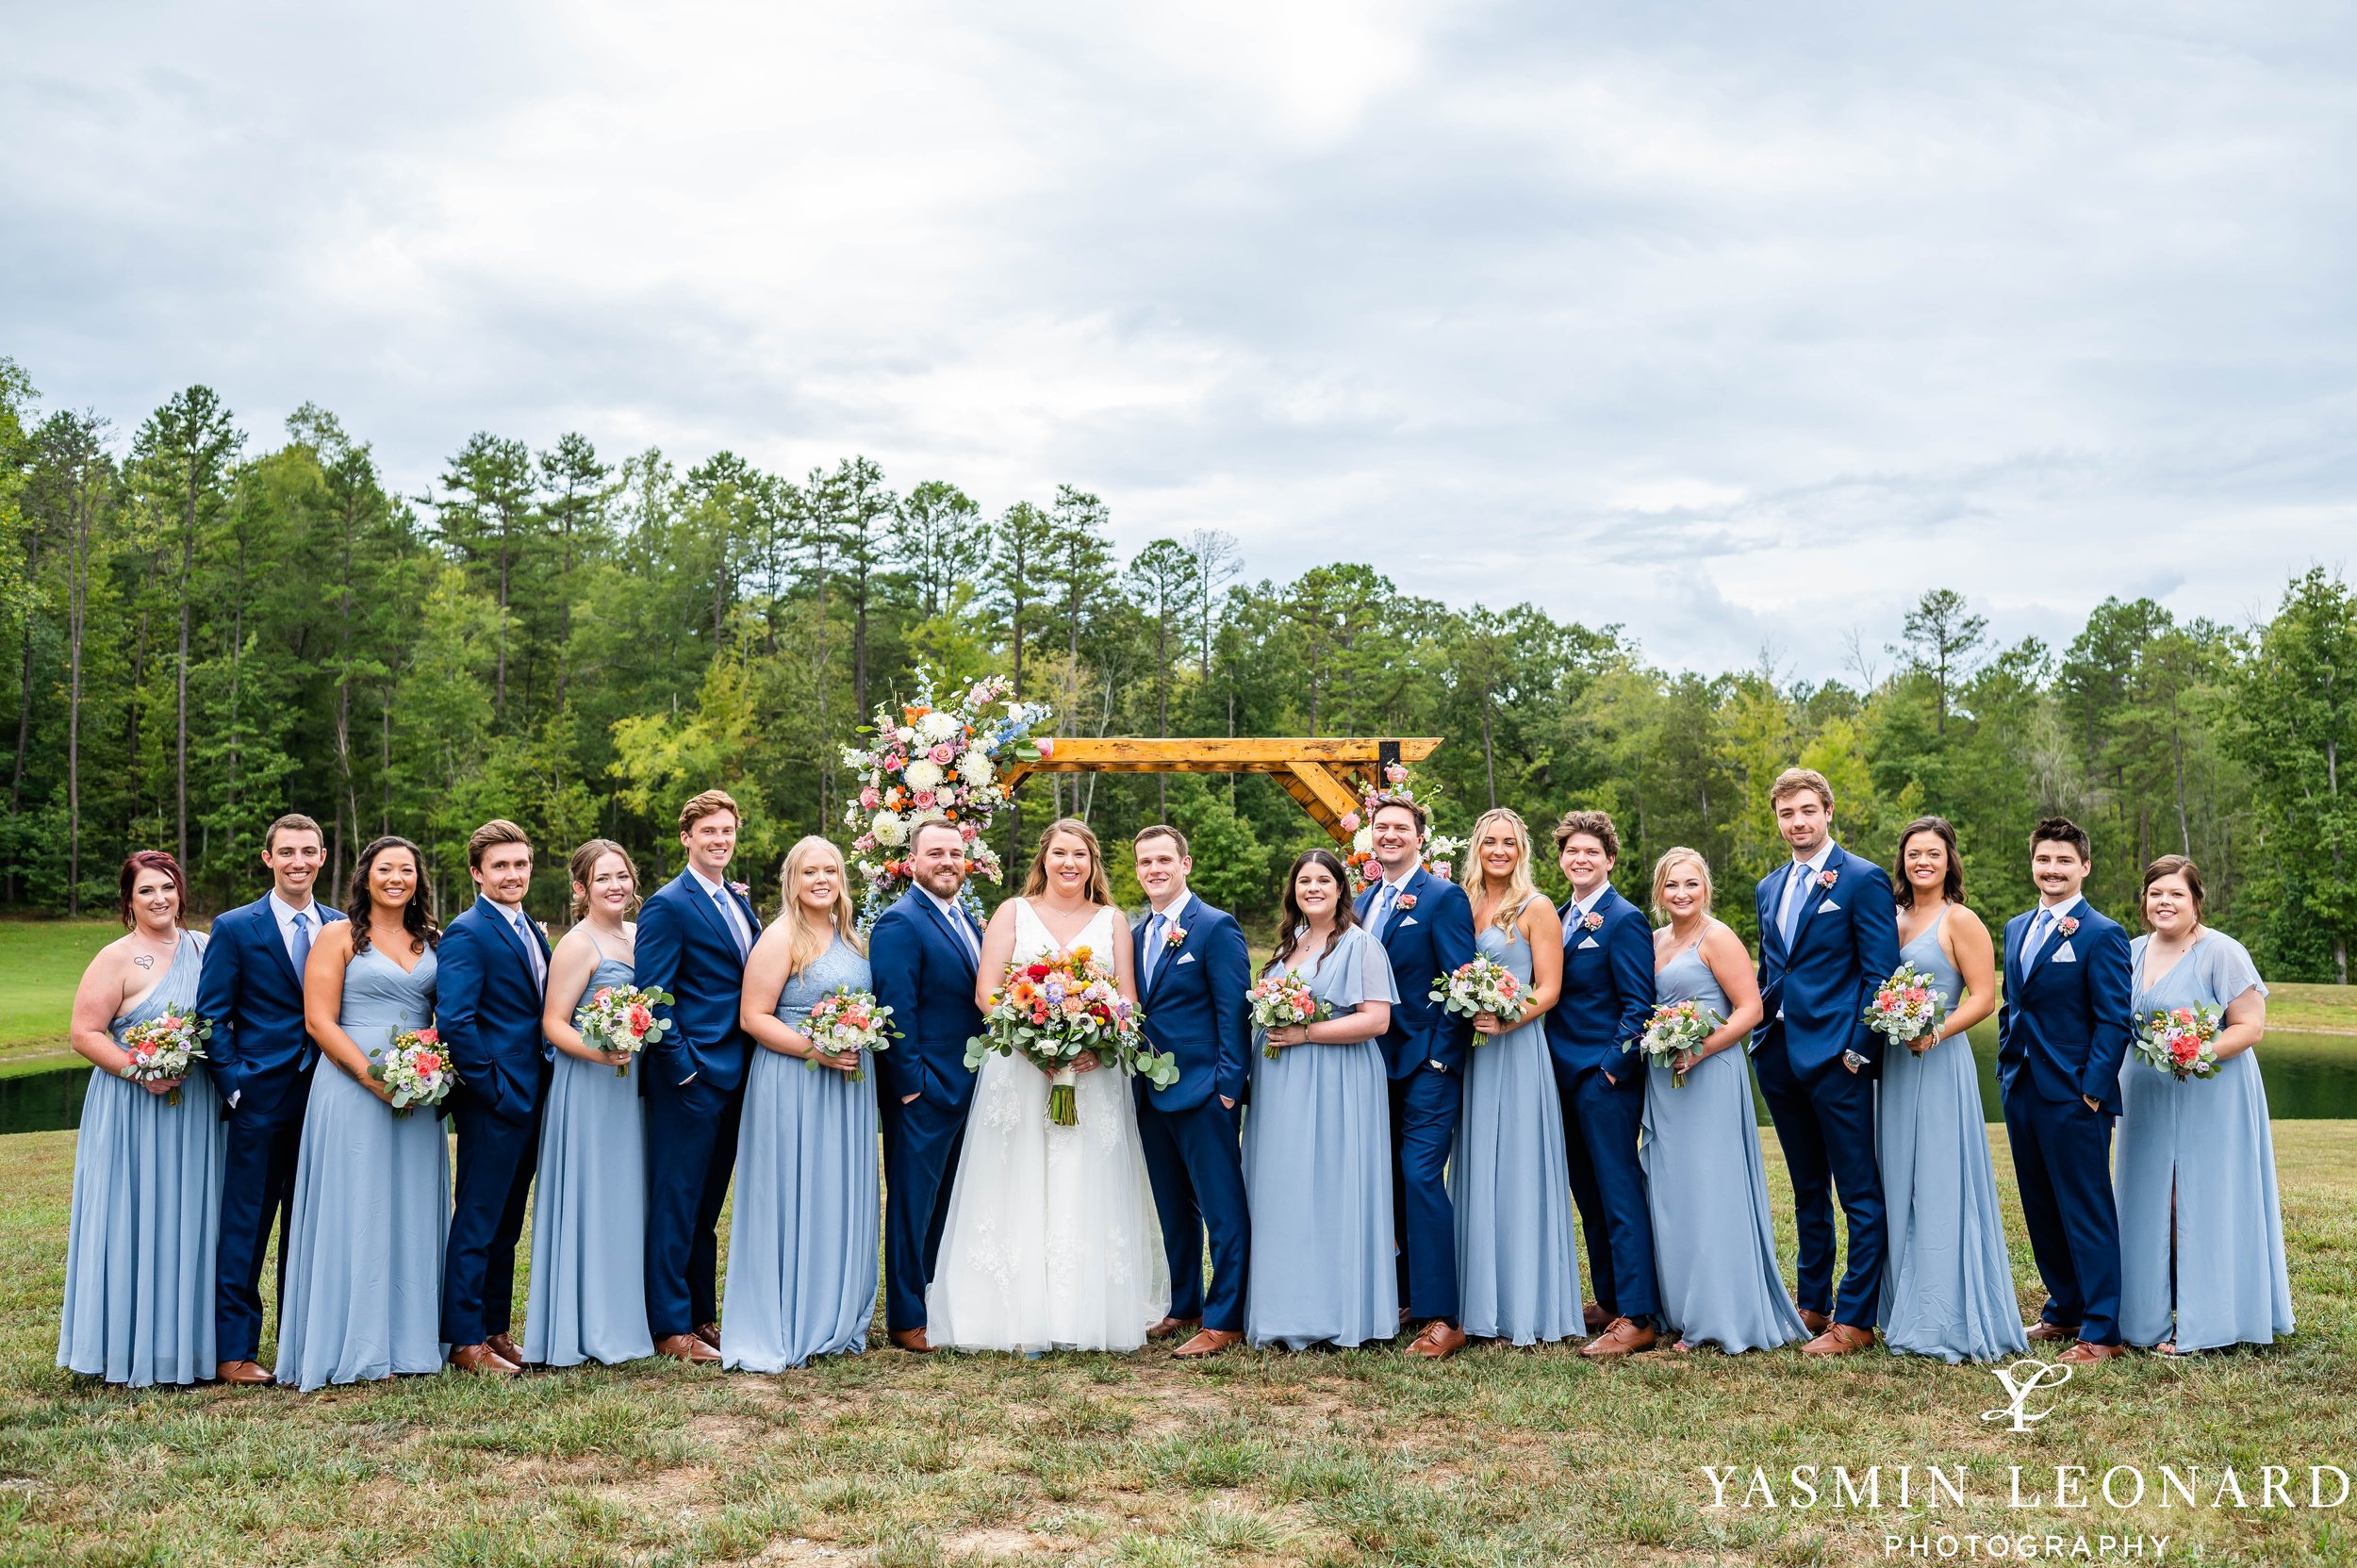 Secret Meadows at Green Dell Farm - Wedding in Thomasville - Barn Wedding in the Triad - High Point Wedding Photographer - Yasmin Leonard Photography -25.jpg